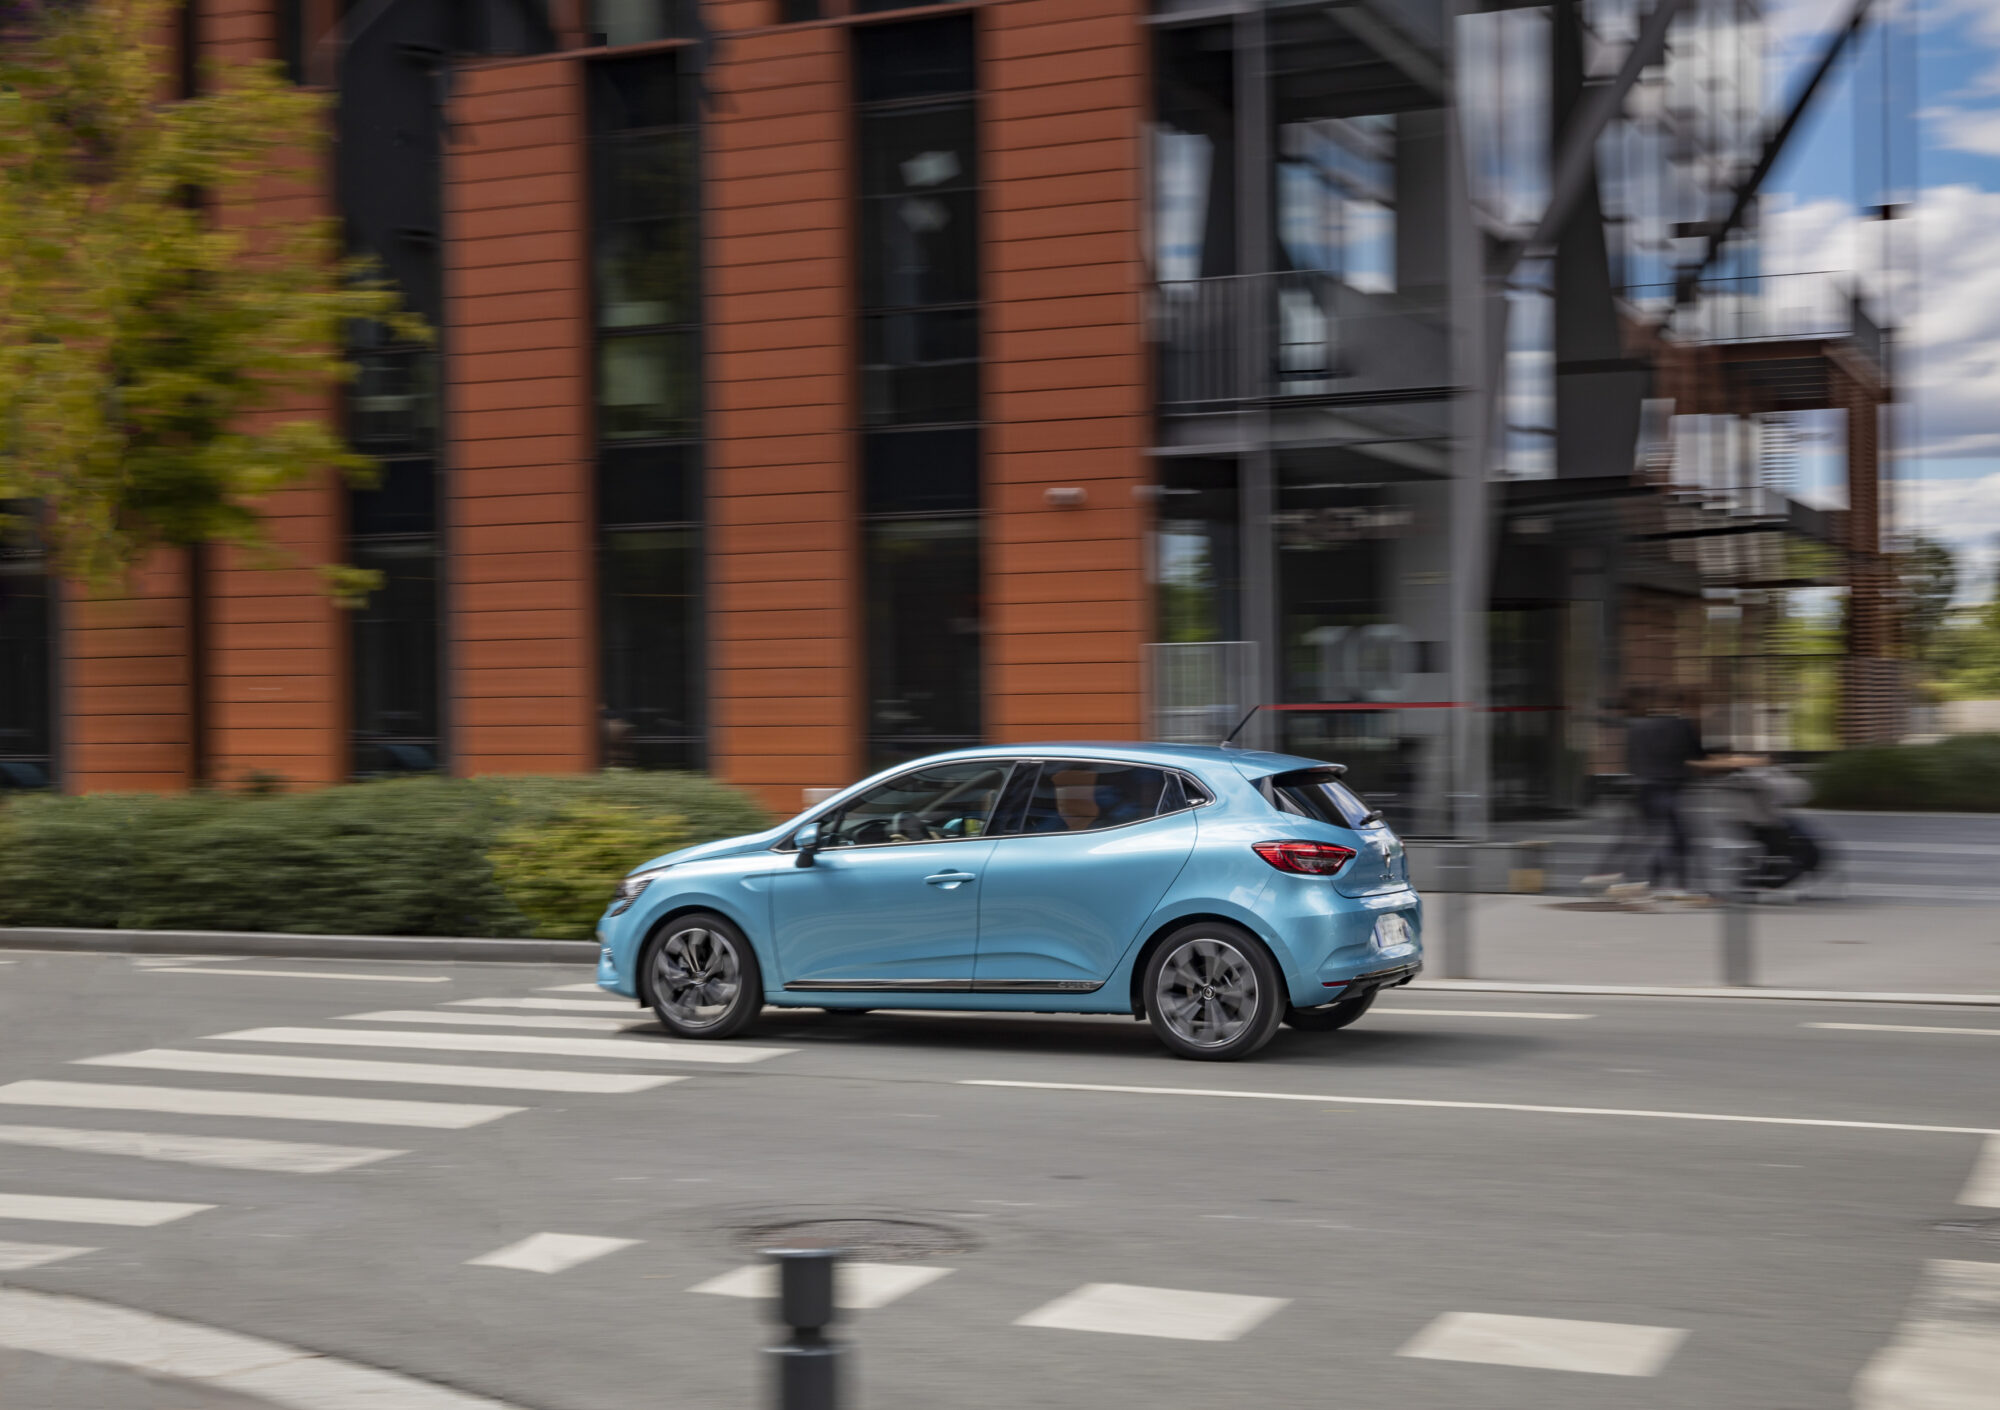 2020 - Renault CLIO E-TECH tests drive